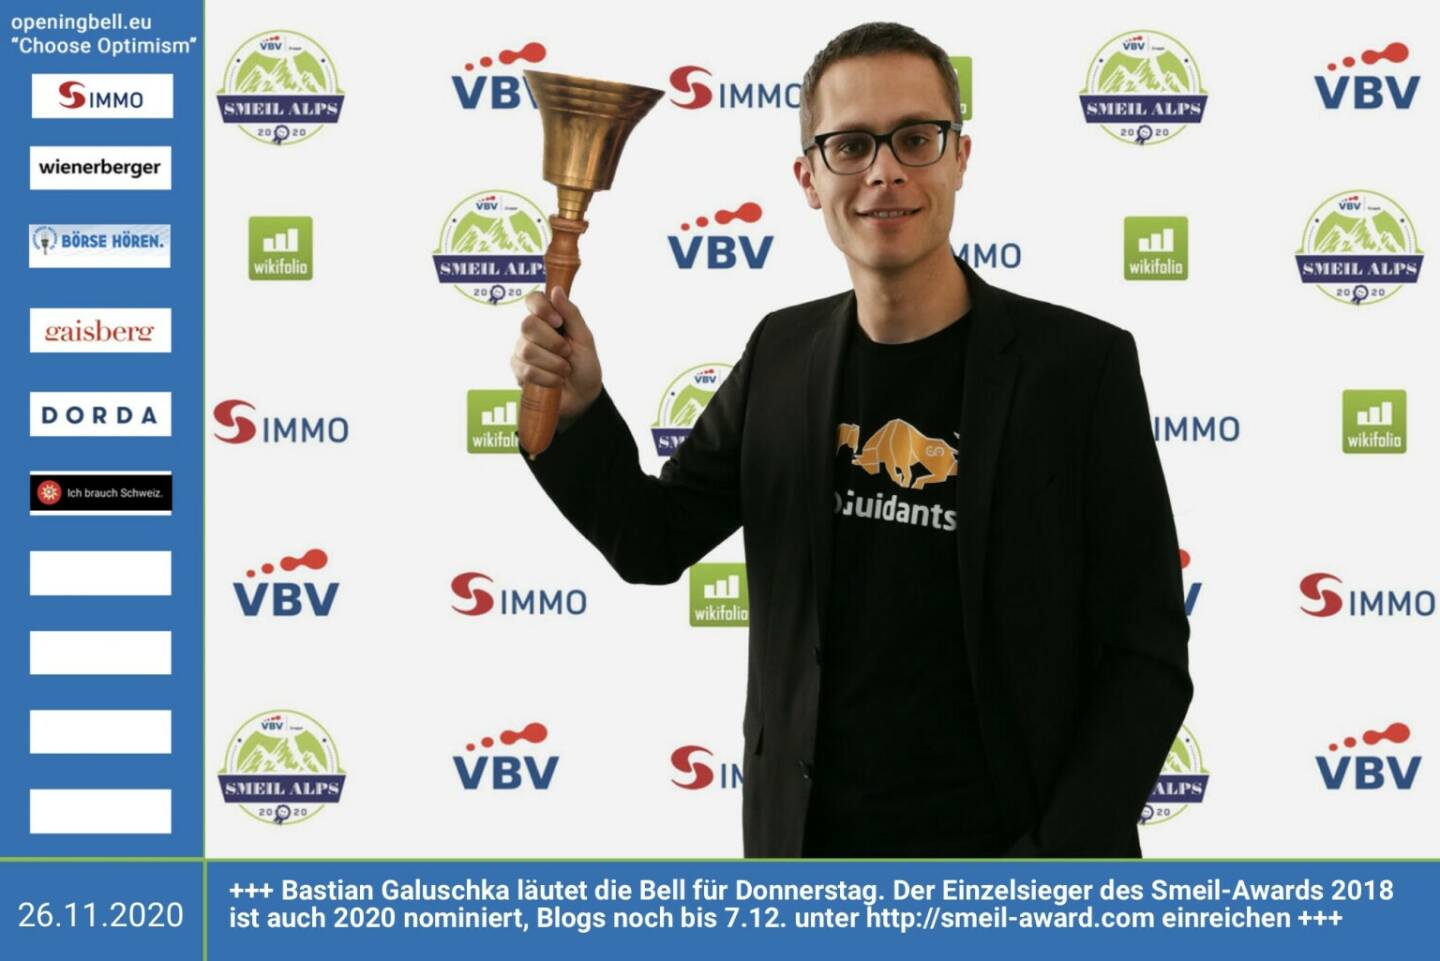 26.11.: Bastian Galuschka läutet die Bell für Donnerstag. Der Einzelsieger des Smeil-Awards 2018 ist auch 2020 nominiert, Blogs noch bis 7.12. unter http://smeil-award.com einreichen https://go.guidants.com/de/#c/bastian_galuschka http://www.vbv.at - Mehr Choose Optimism: https://boerse-social.com/category/choose_optimism  https://www.facebook.com/chooseoptimism/